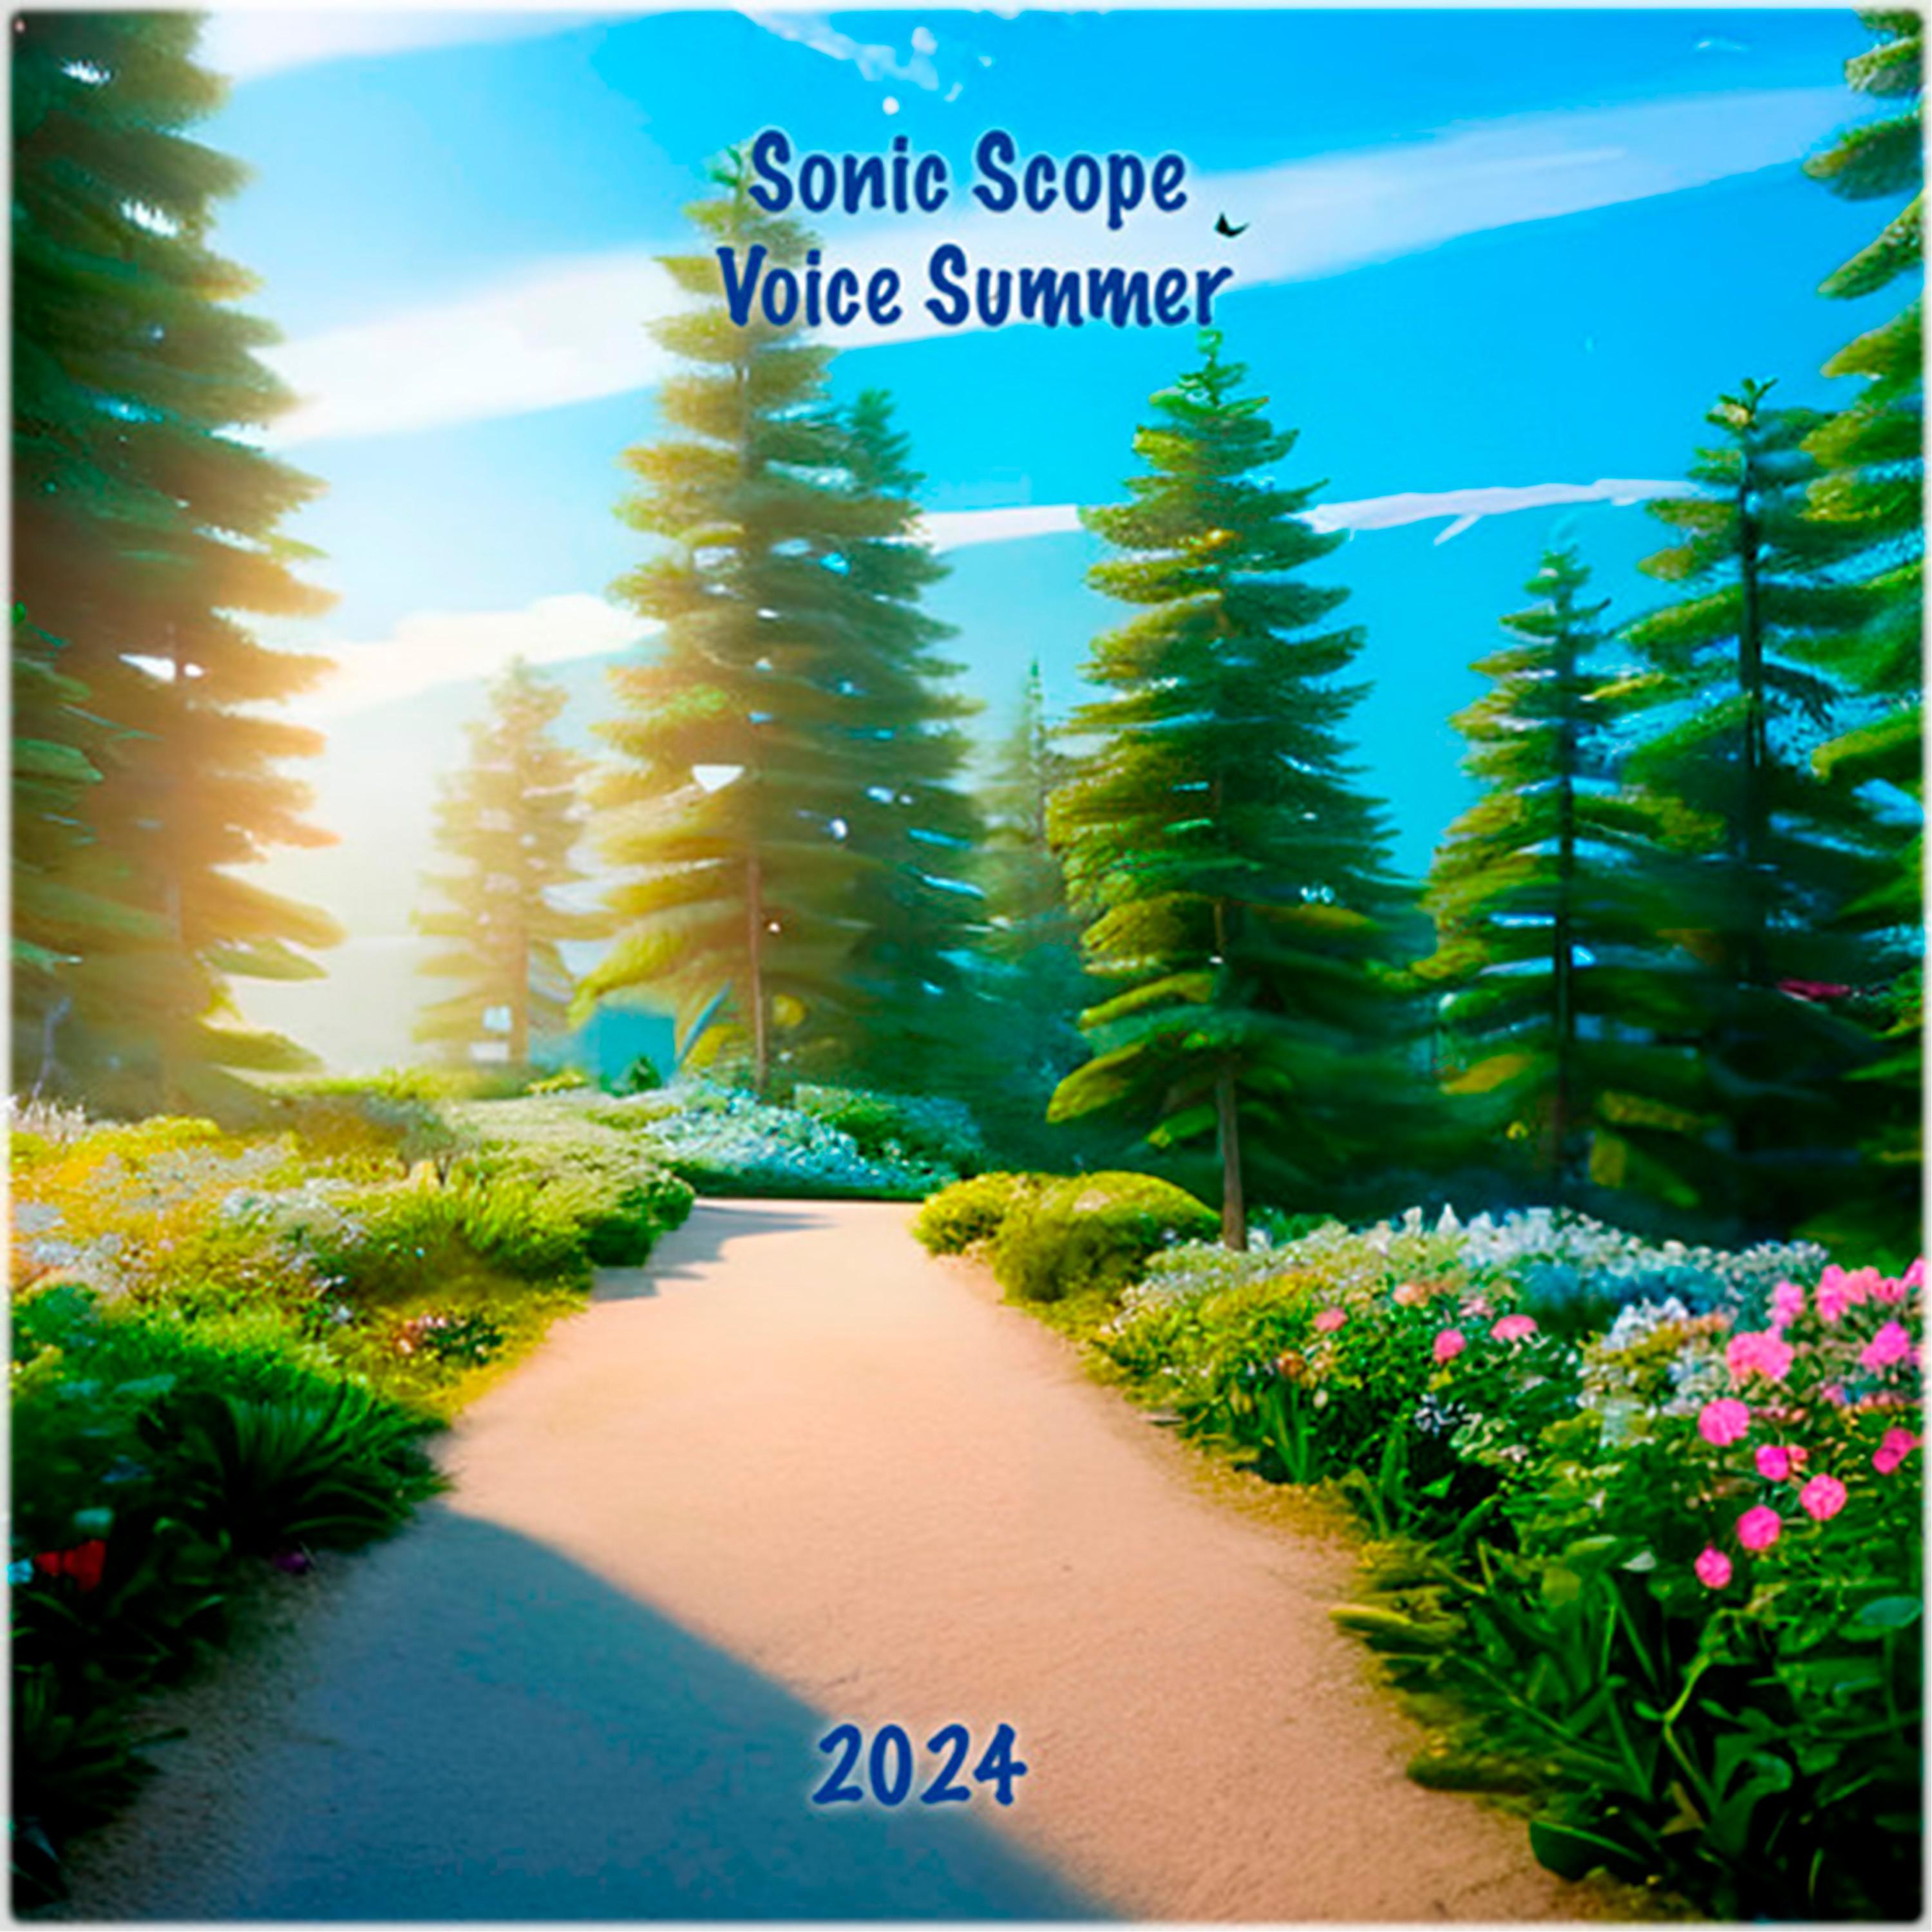 Sonic Scope - Voice Summer